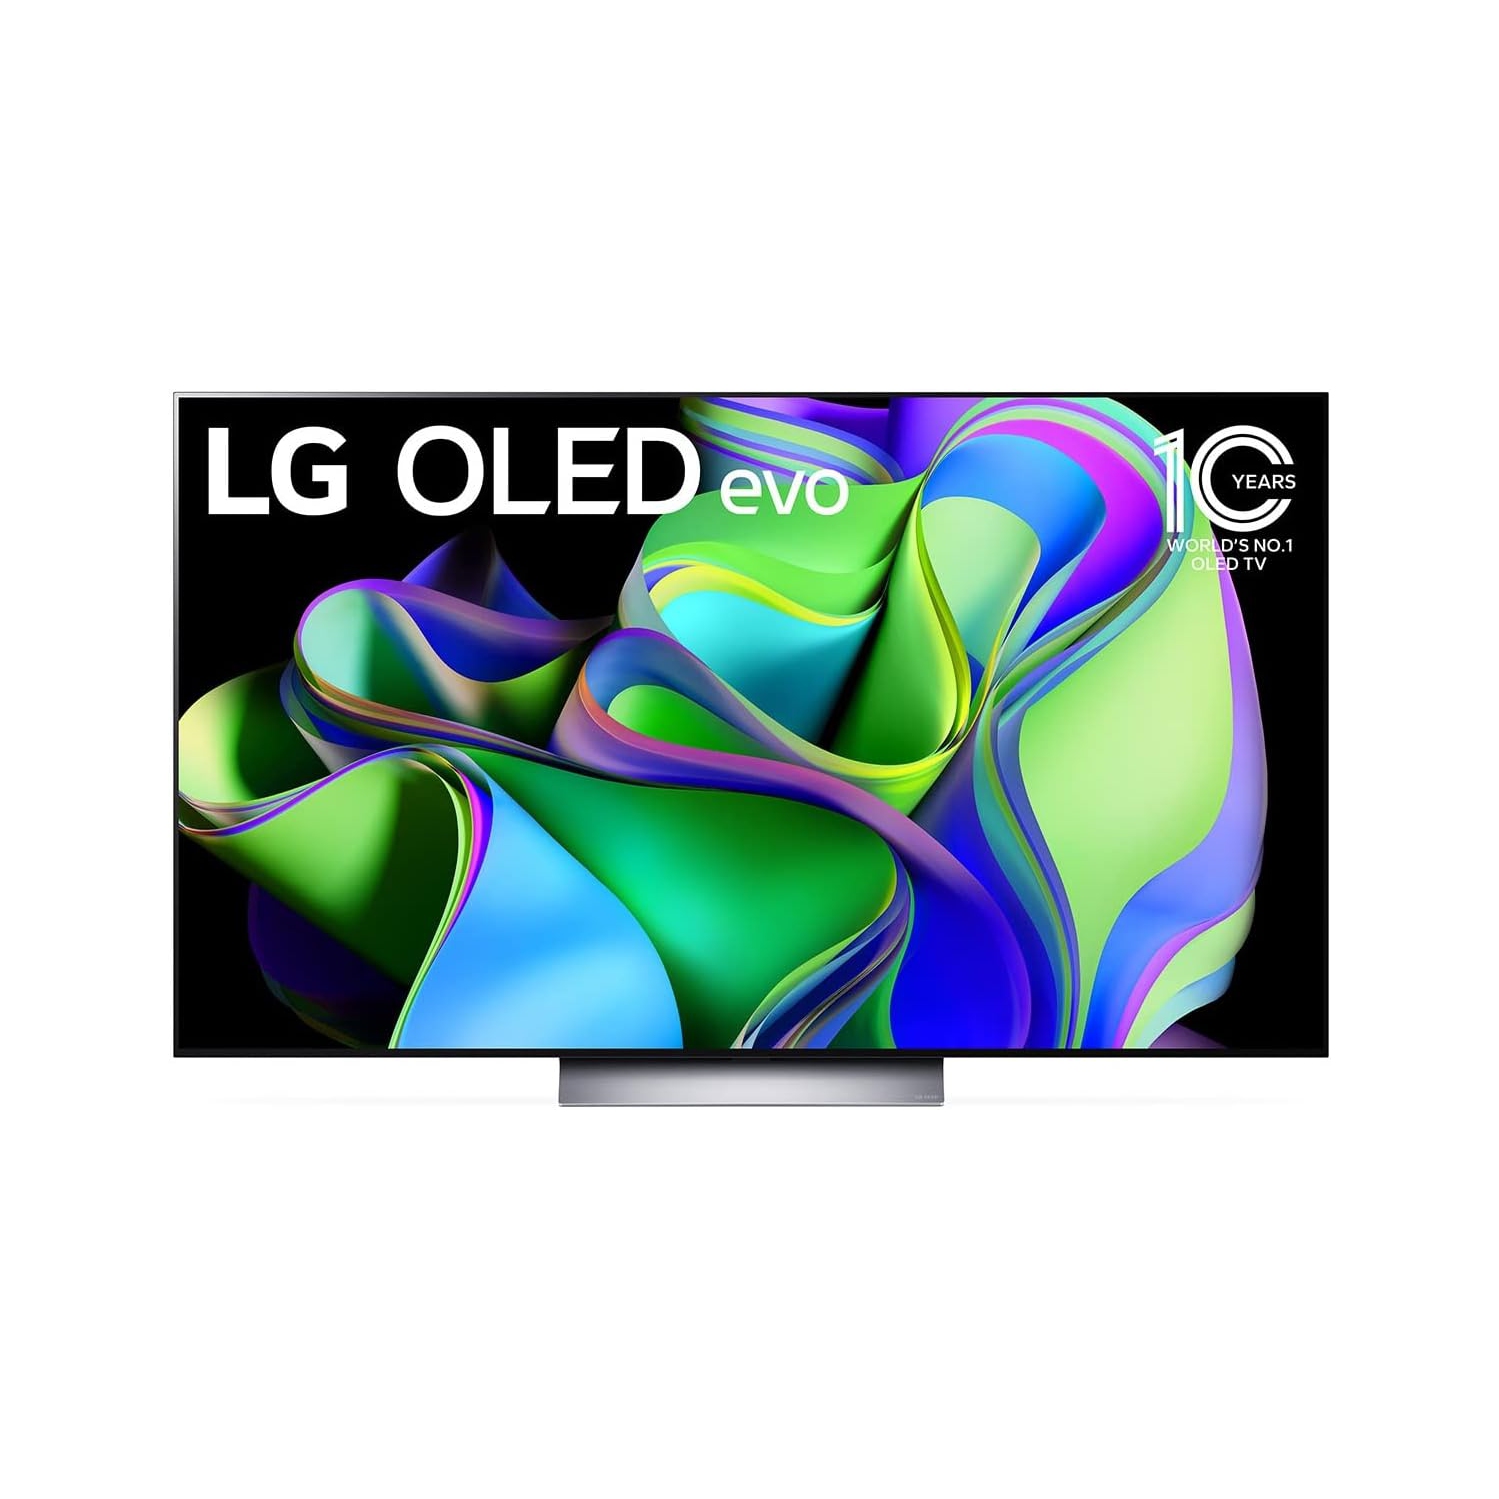 Open Box (10/10) - LG C3 OLED evo 77-Inch 4K Smart TV - AI-Powered, Alexa Built-in, Gaming, 120Hz Refresh, HDMI 2.1, FreeSync, G-sync, VRR, WebOS, 77" Television